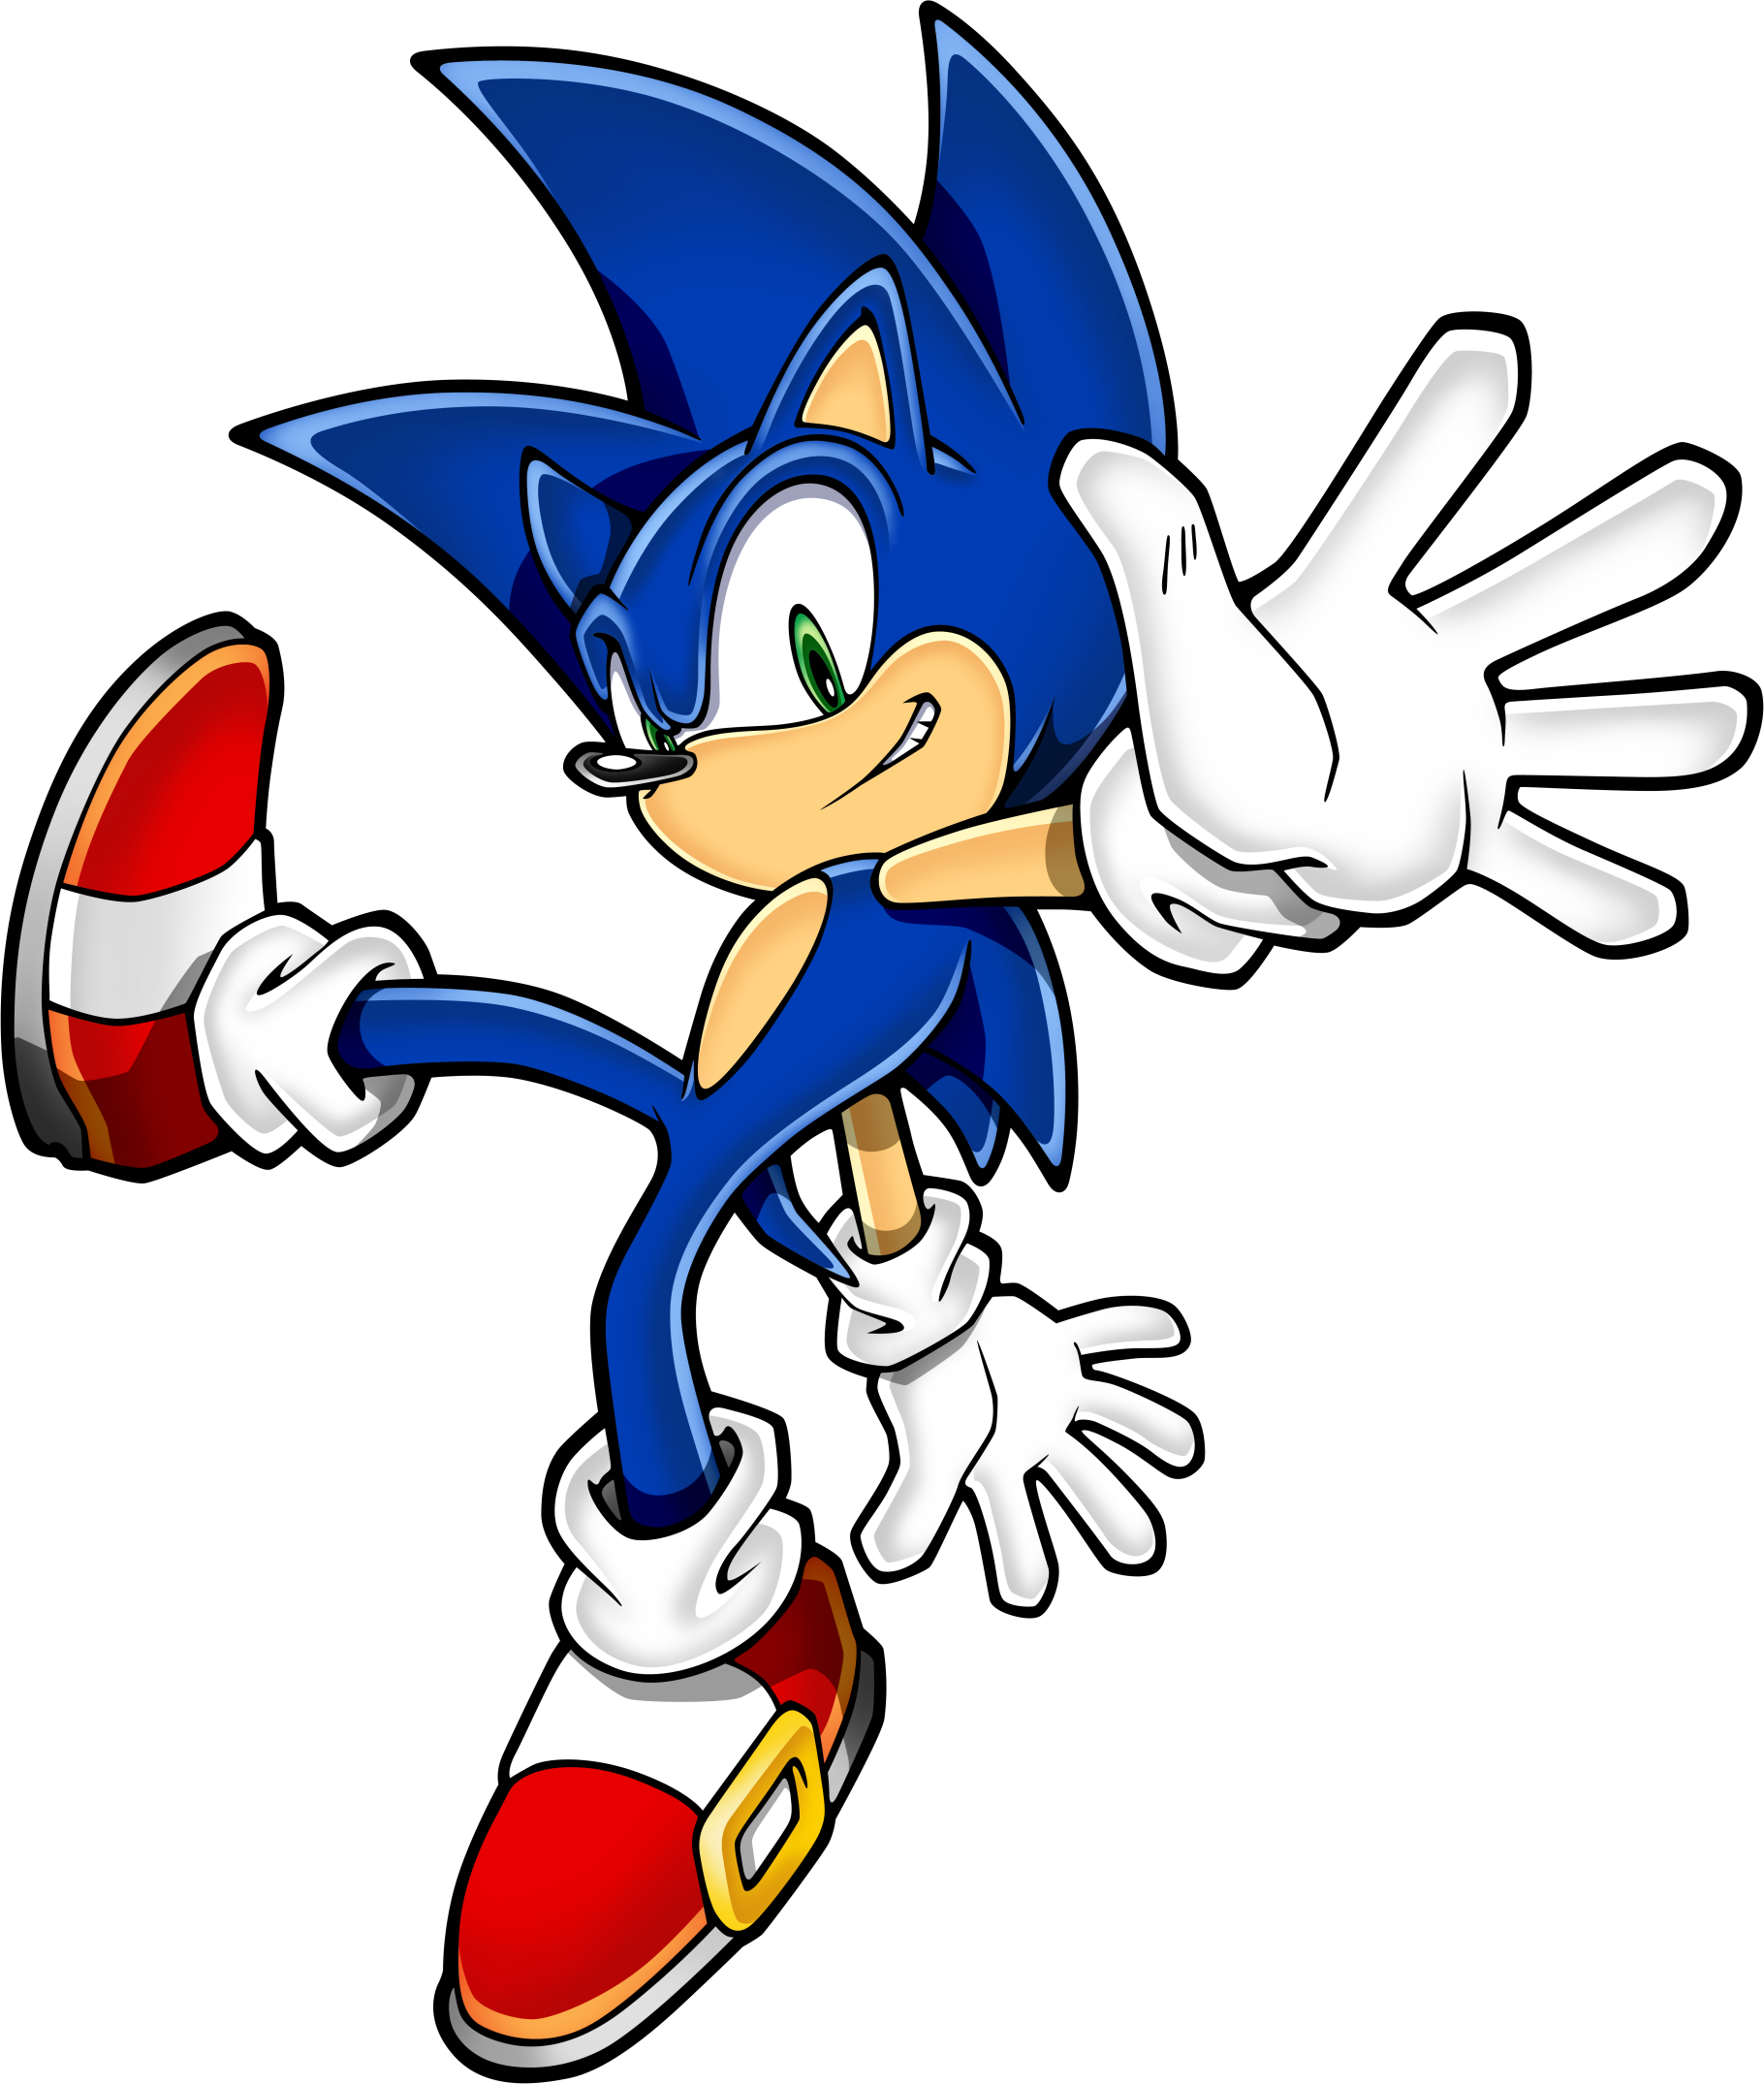 Sonic Art Assets Dvd   Sonic The Hedgehog   5.png - Hedgehog, Transparent background PNG HD thumbnail